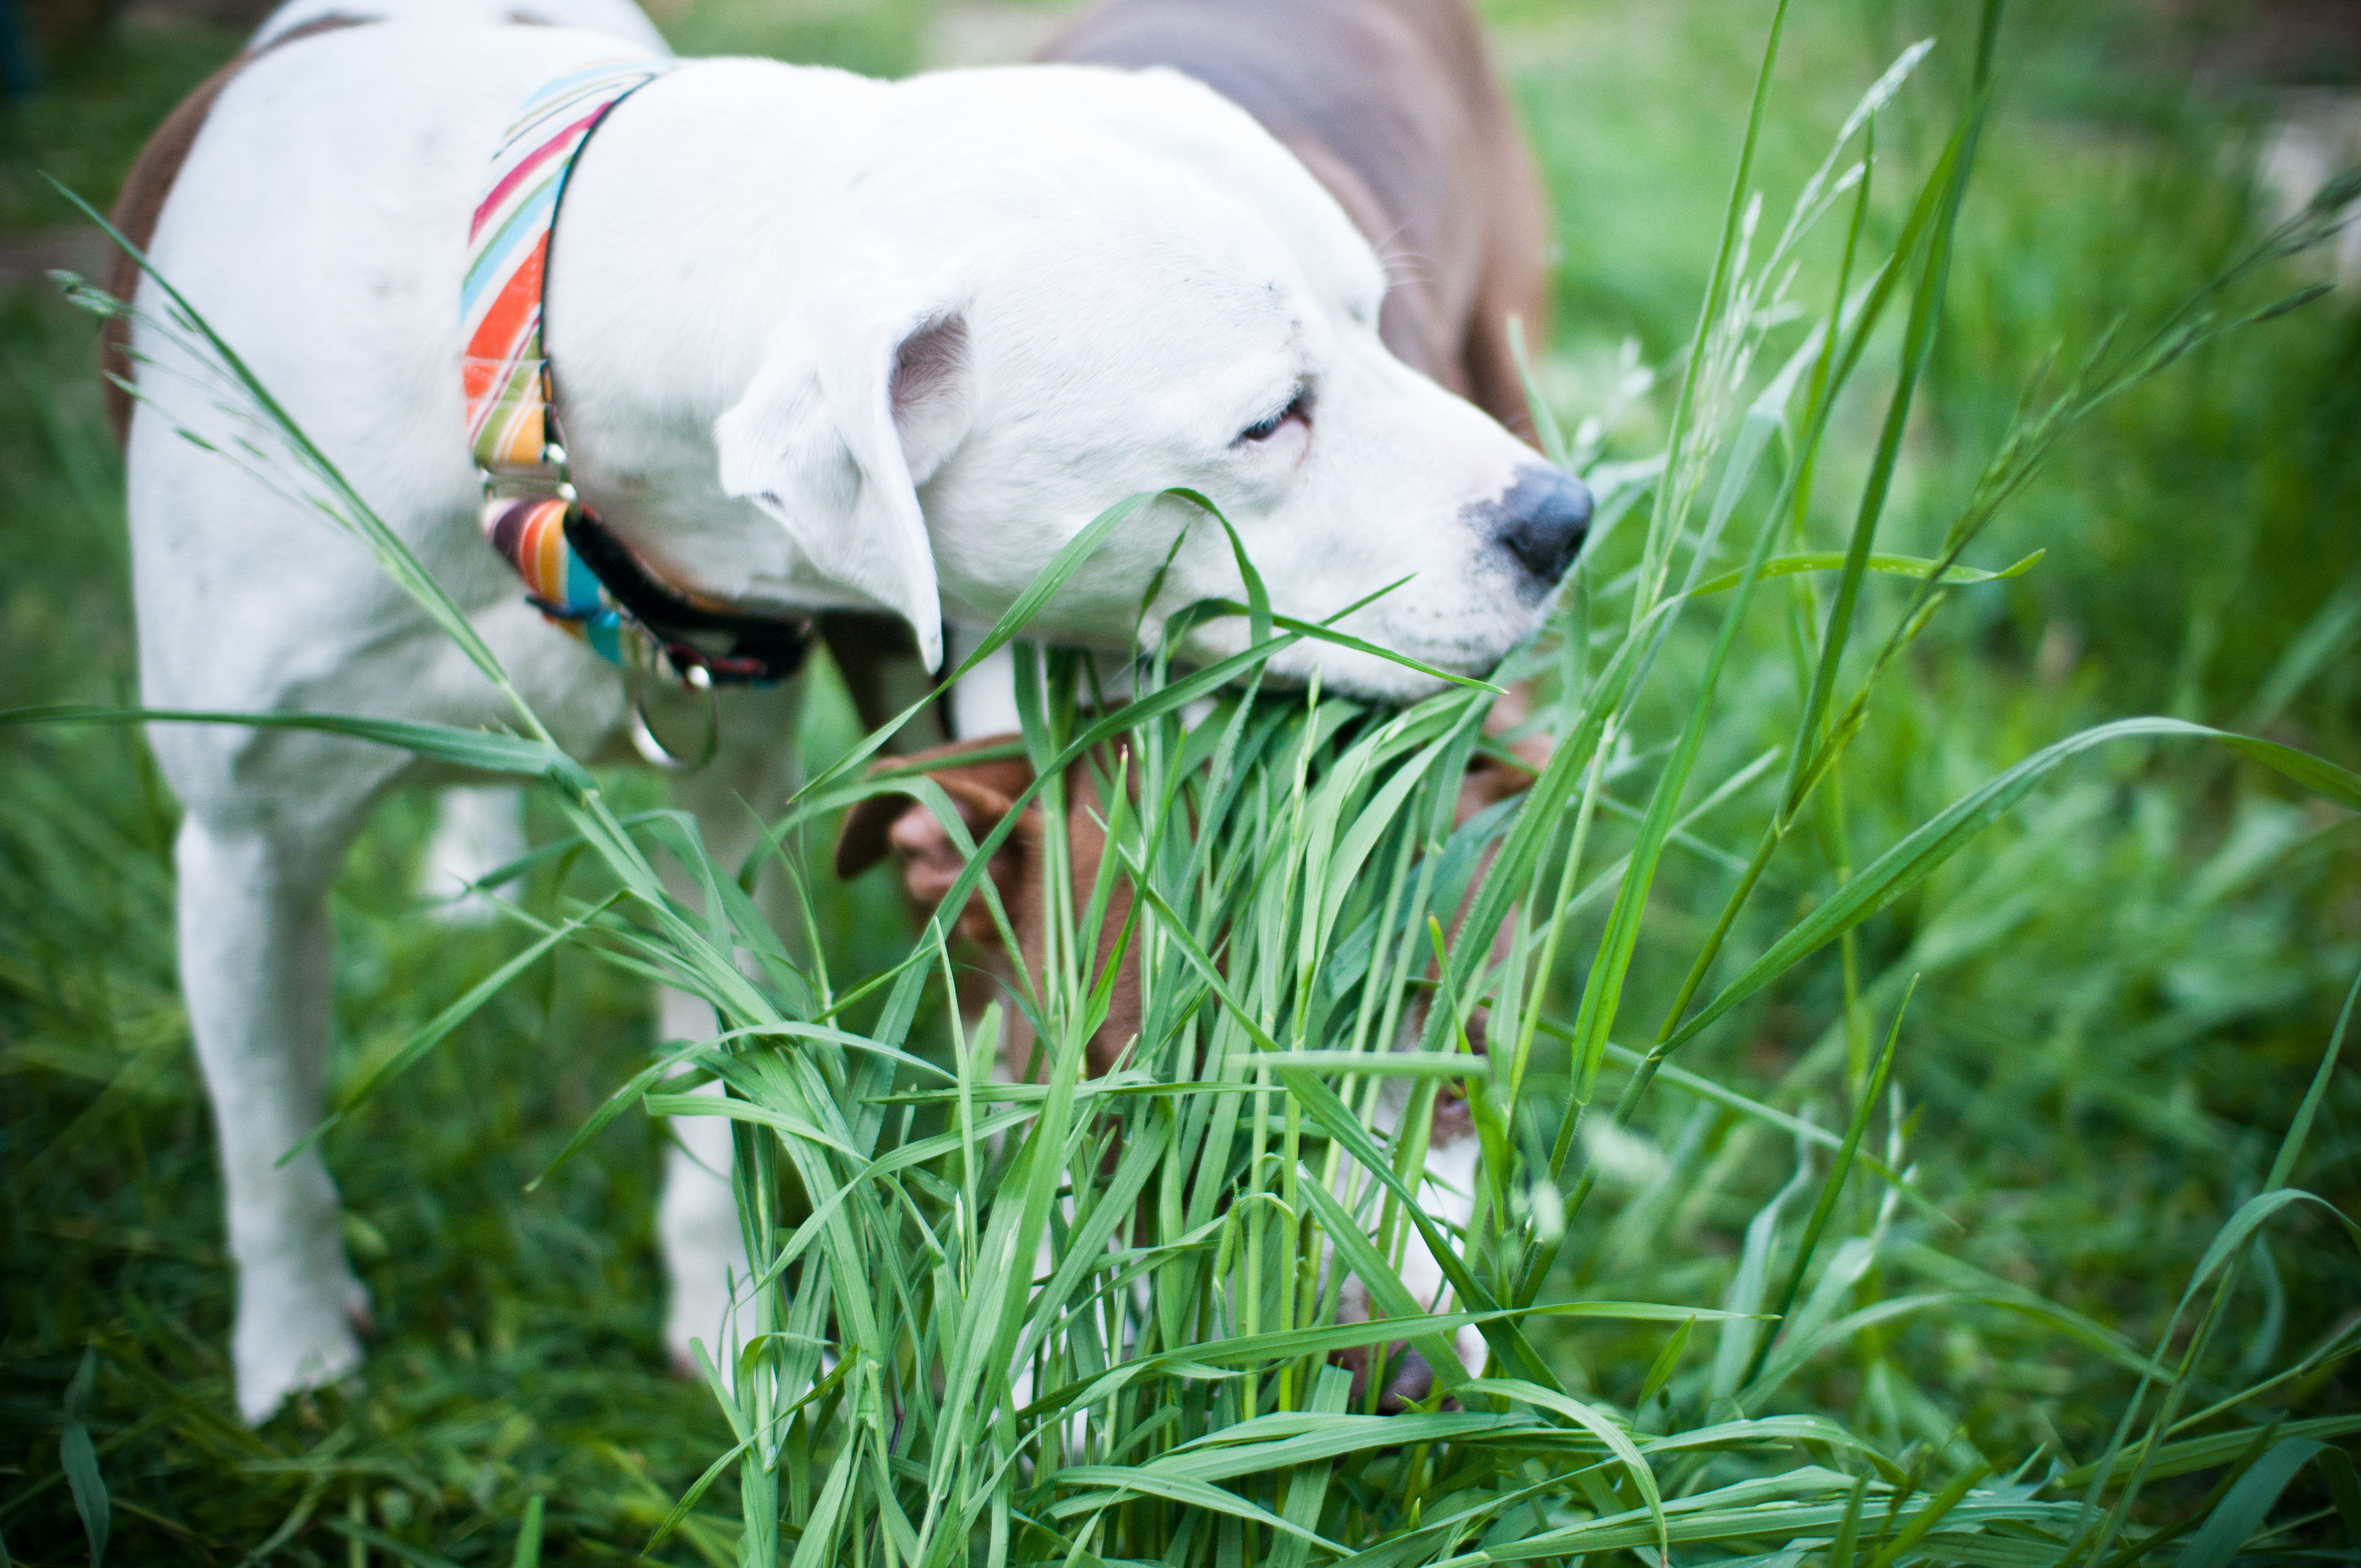 Зачем собаки едят траву